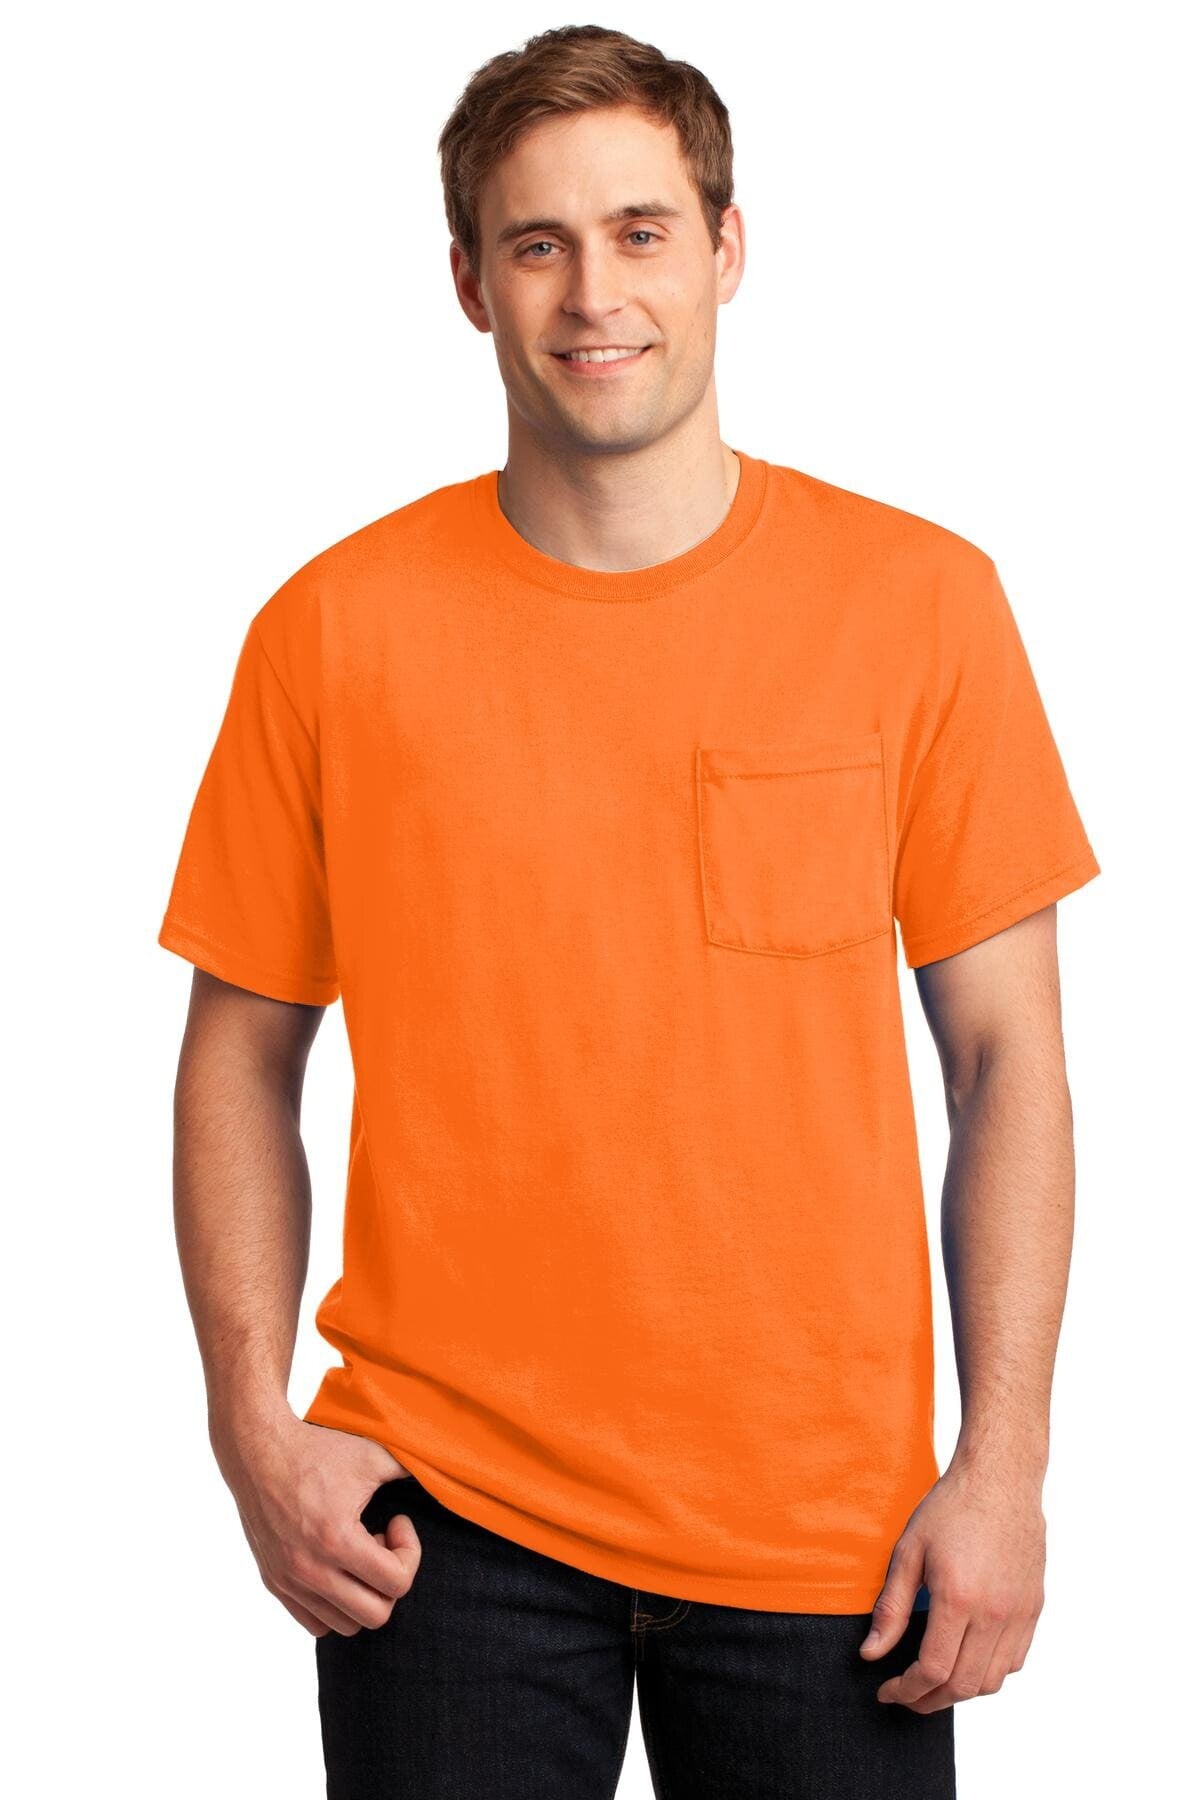 Jerzees - Dri - power 50/50 Cotton/poly Pocket T - shirt. 29mp Activewear T